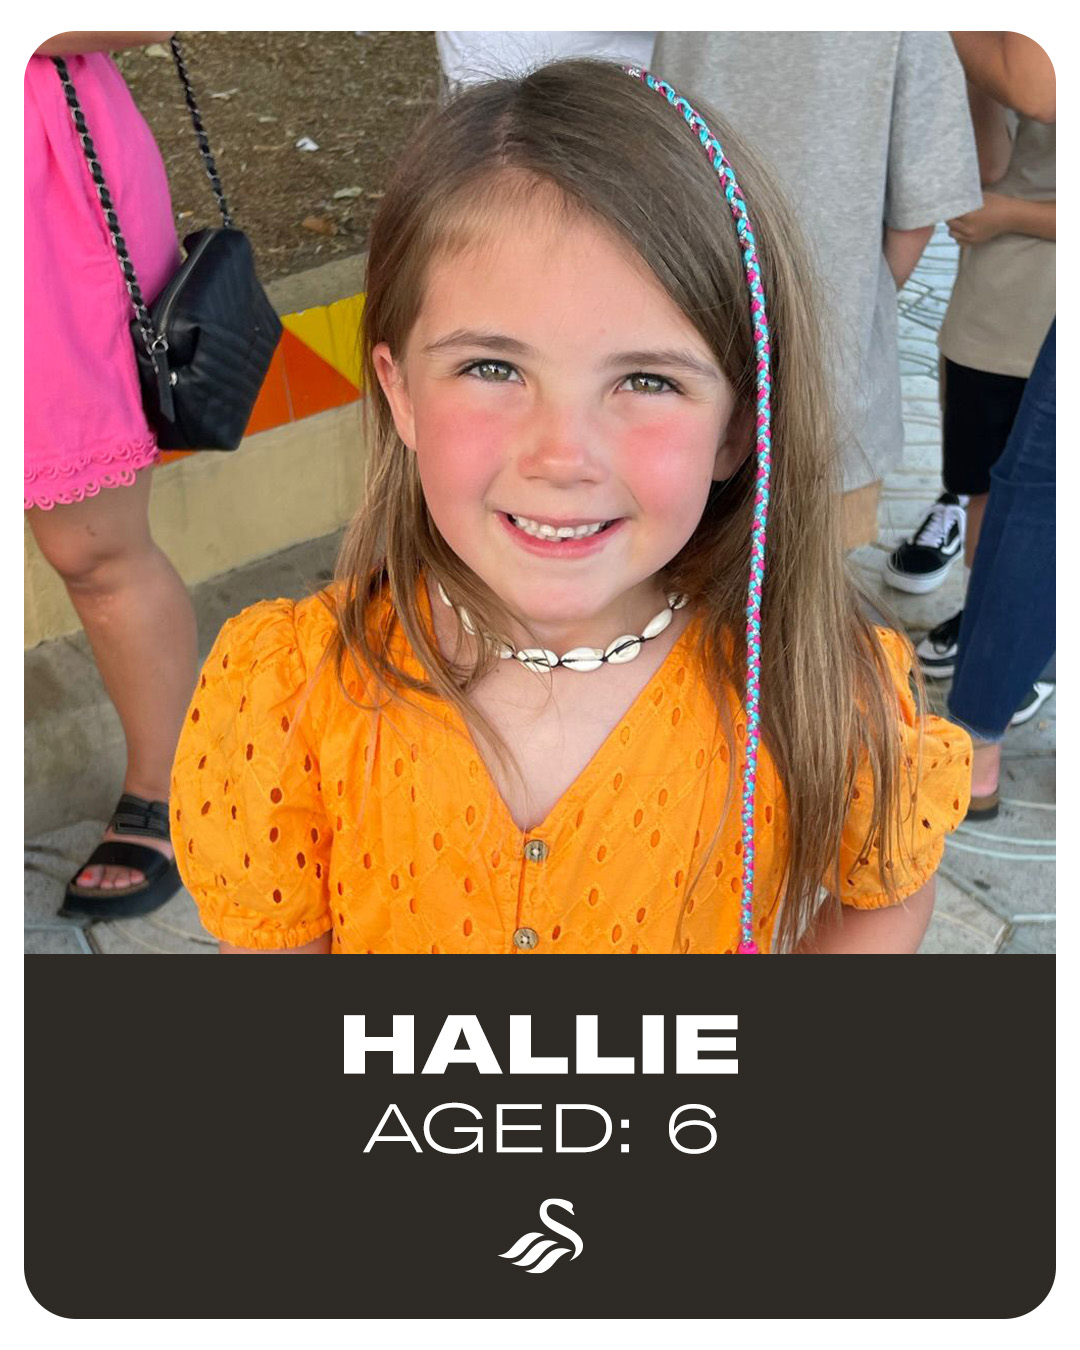 Photograph of Hallie, aged 6